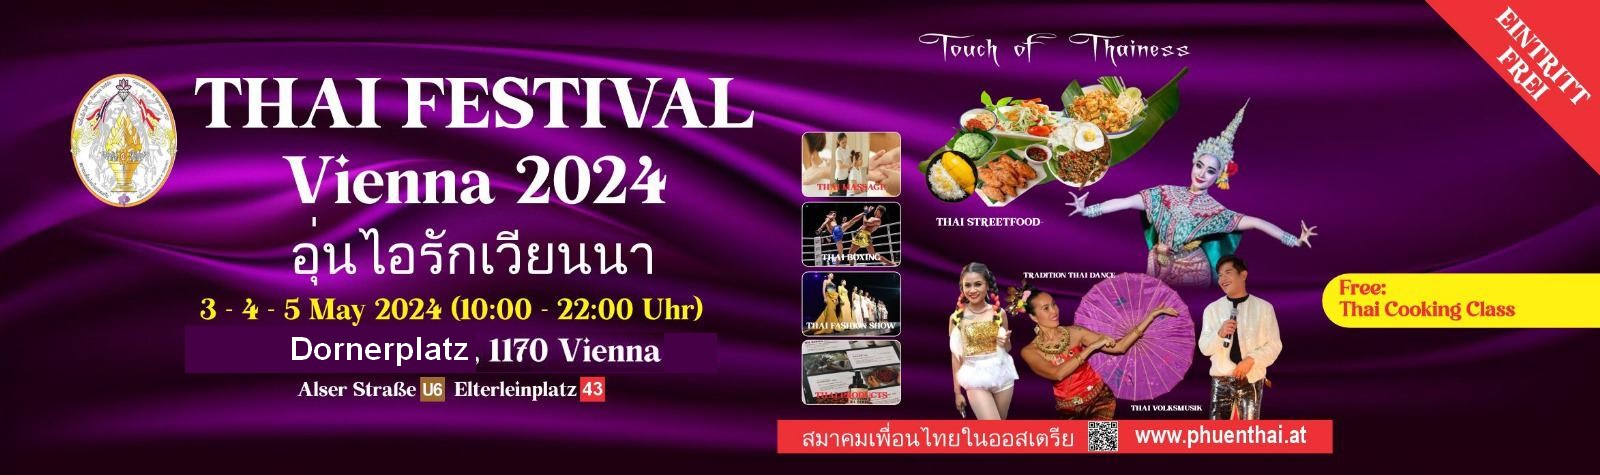 Thailand fabulous summer festival - phuenthai.at